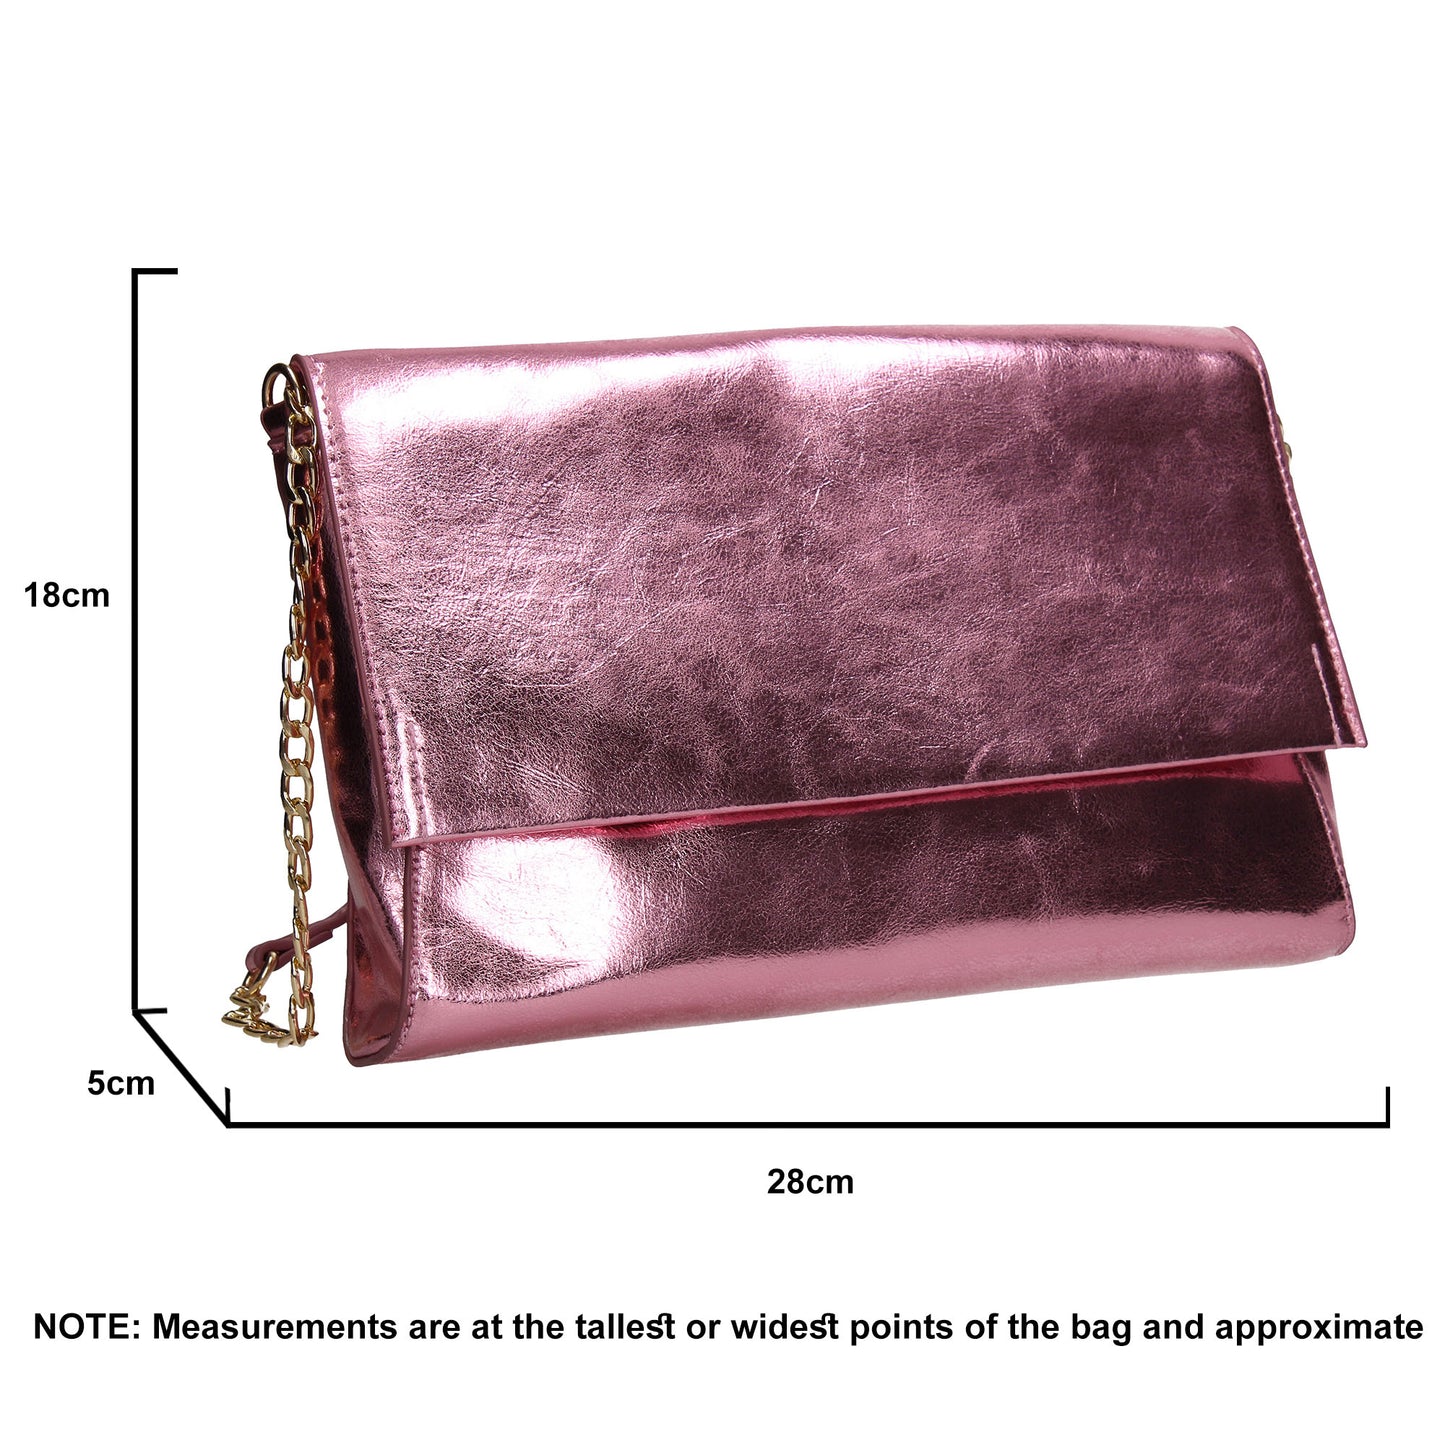 SWANKYSWANS Jenna Clutch Bag Pink Cute Cheap Clutch Bag For Weddings School and Work